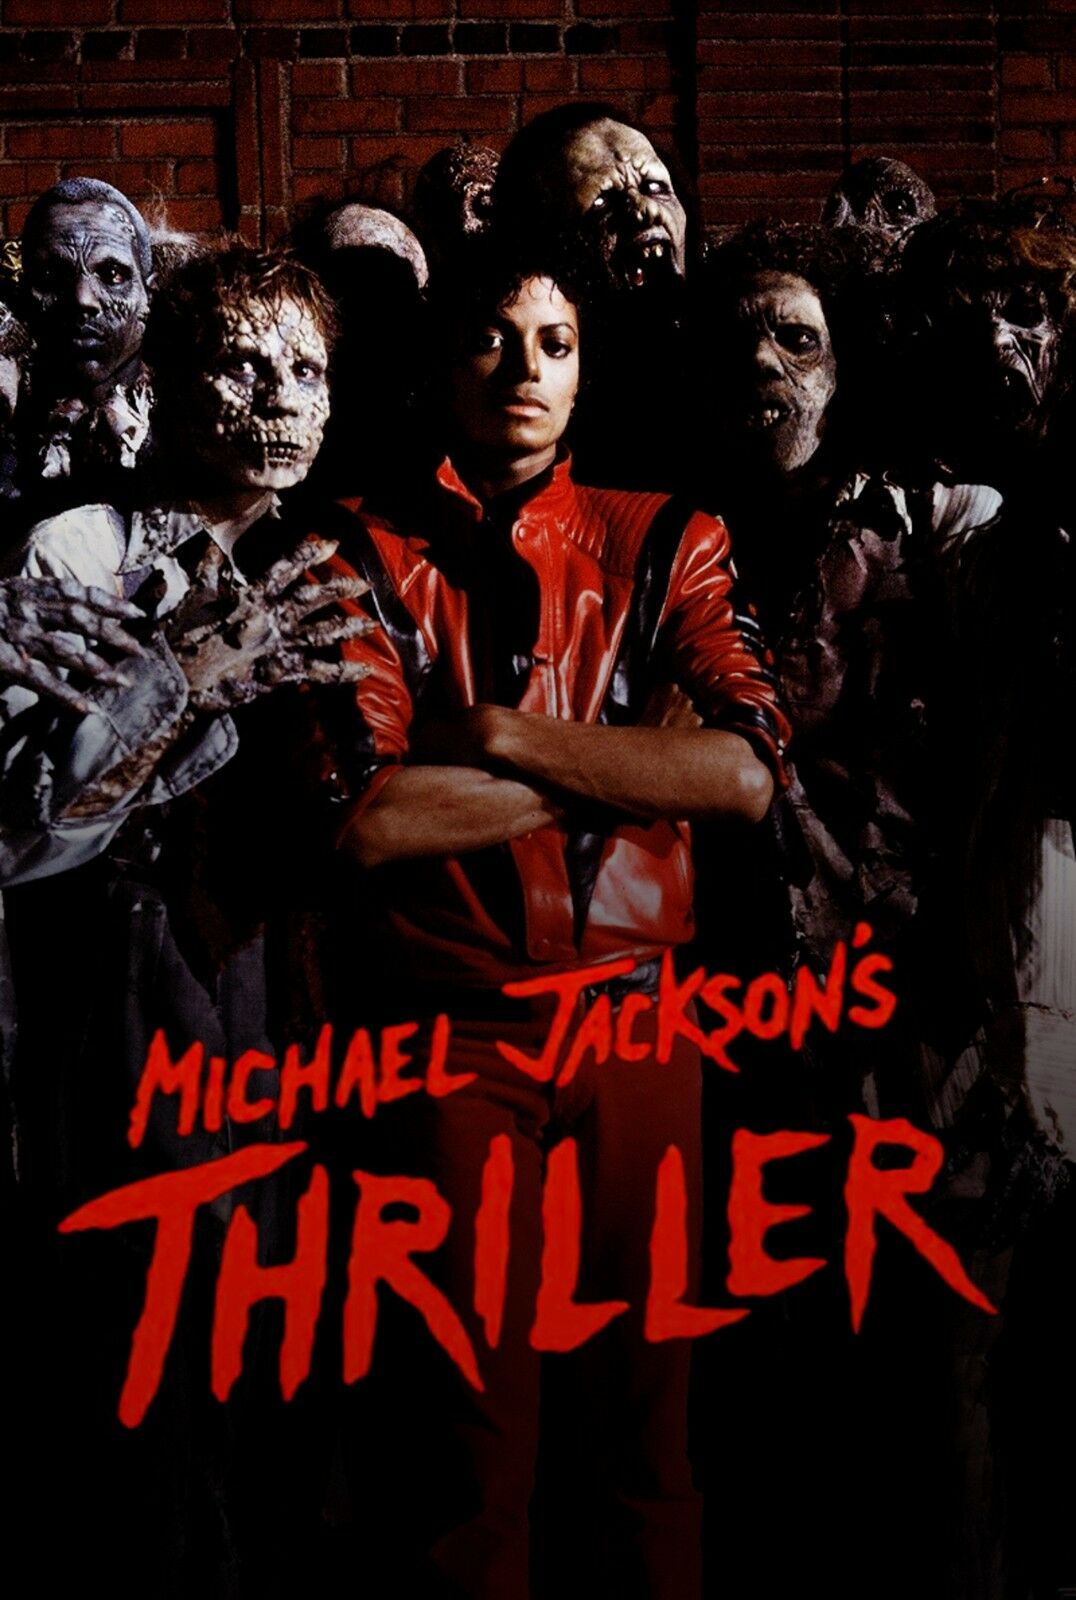 Michael Jackson's Thriller short film